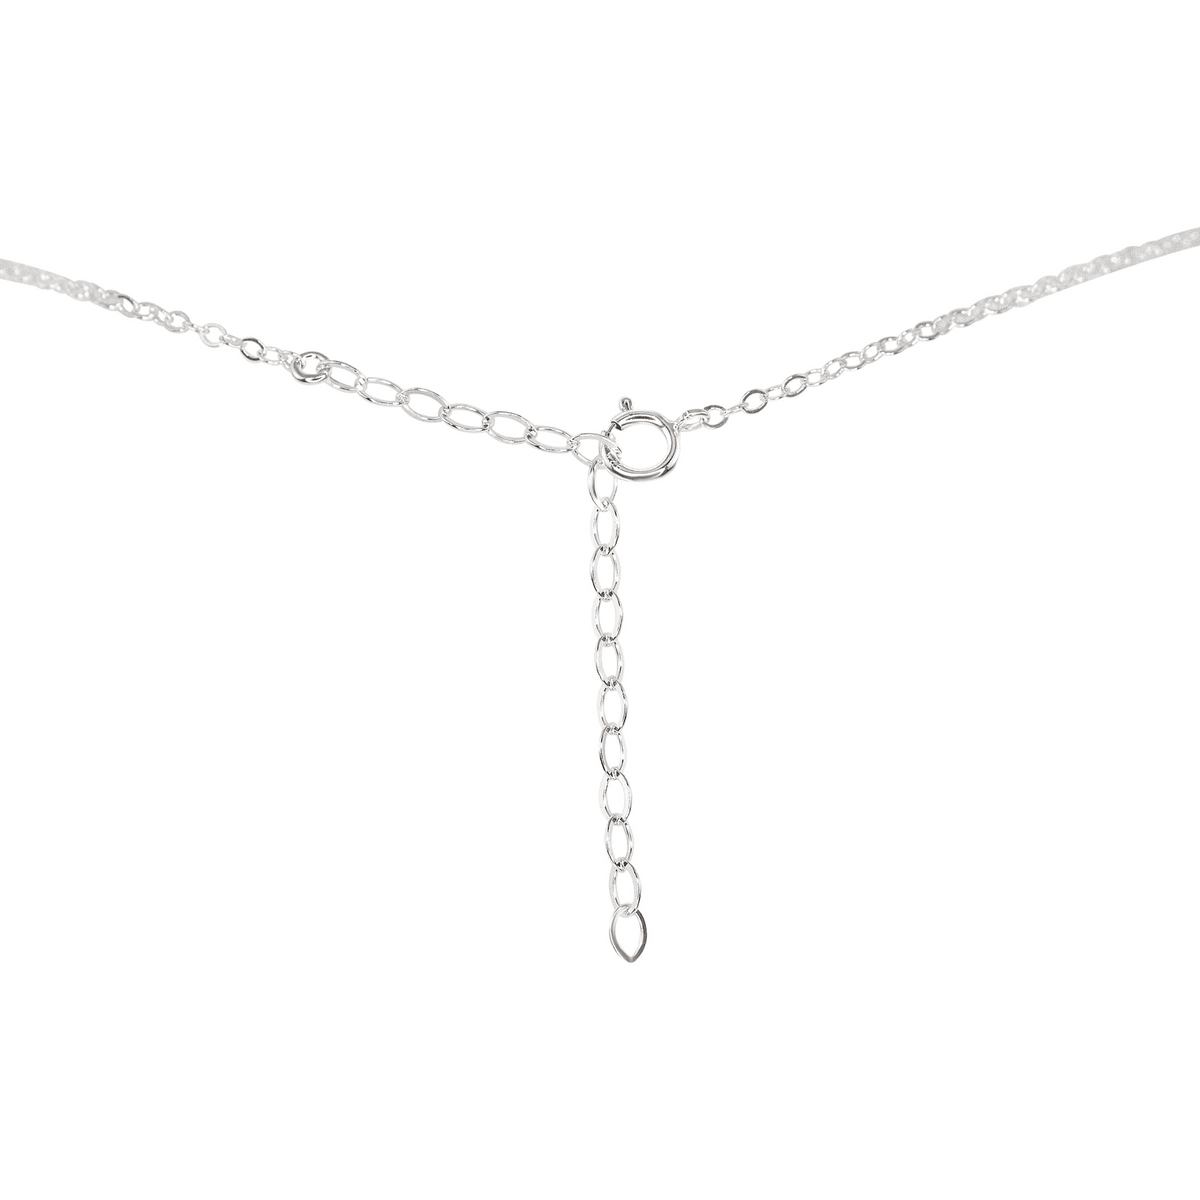 Garnet Beaded Chain Choker Necklace - Garnet Beaded Chain Choker Necklace - 14k Gold Fill - Luna Tide Handmade Crystal Jewellery